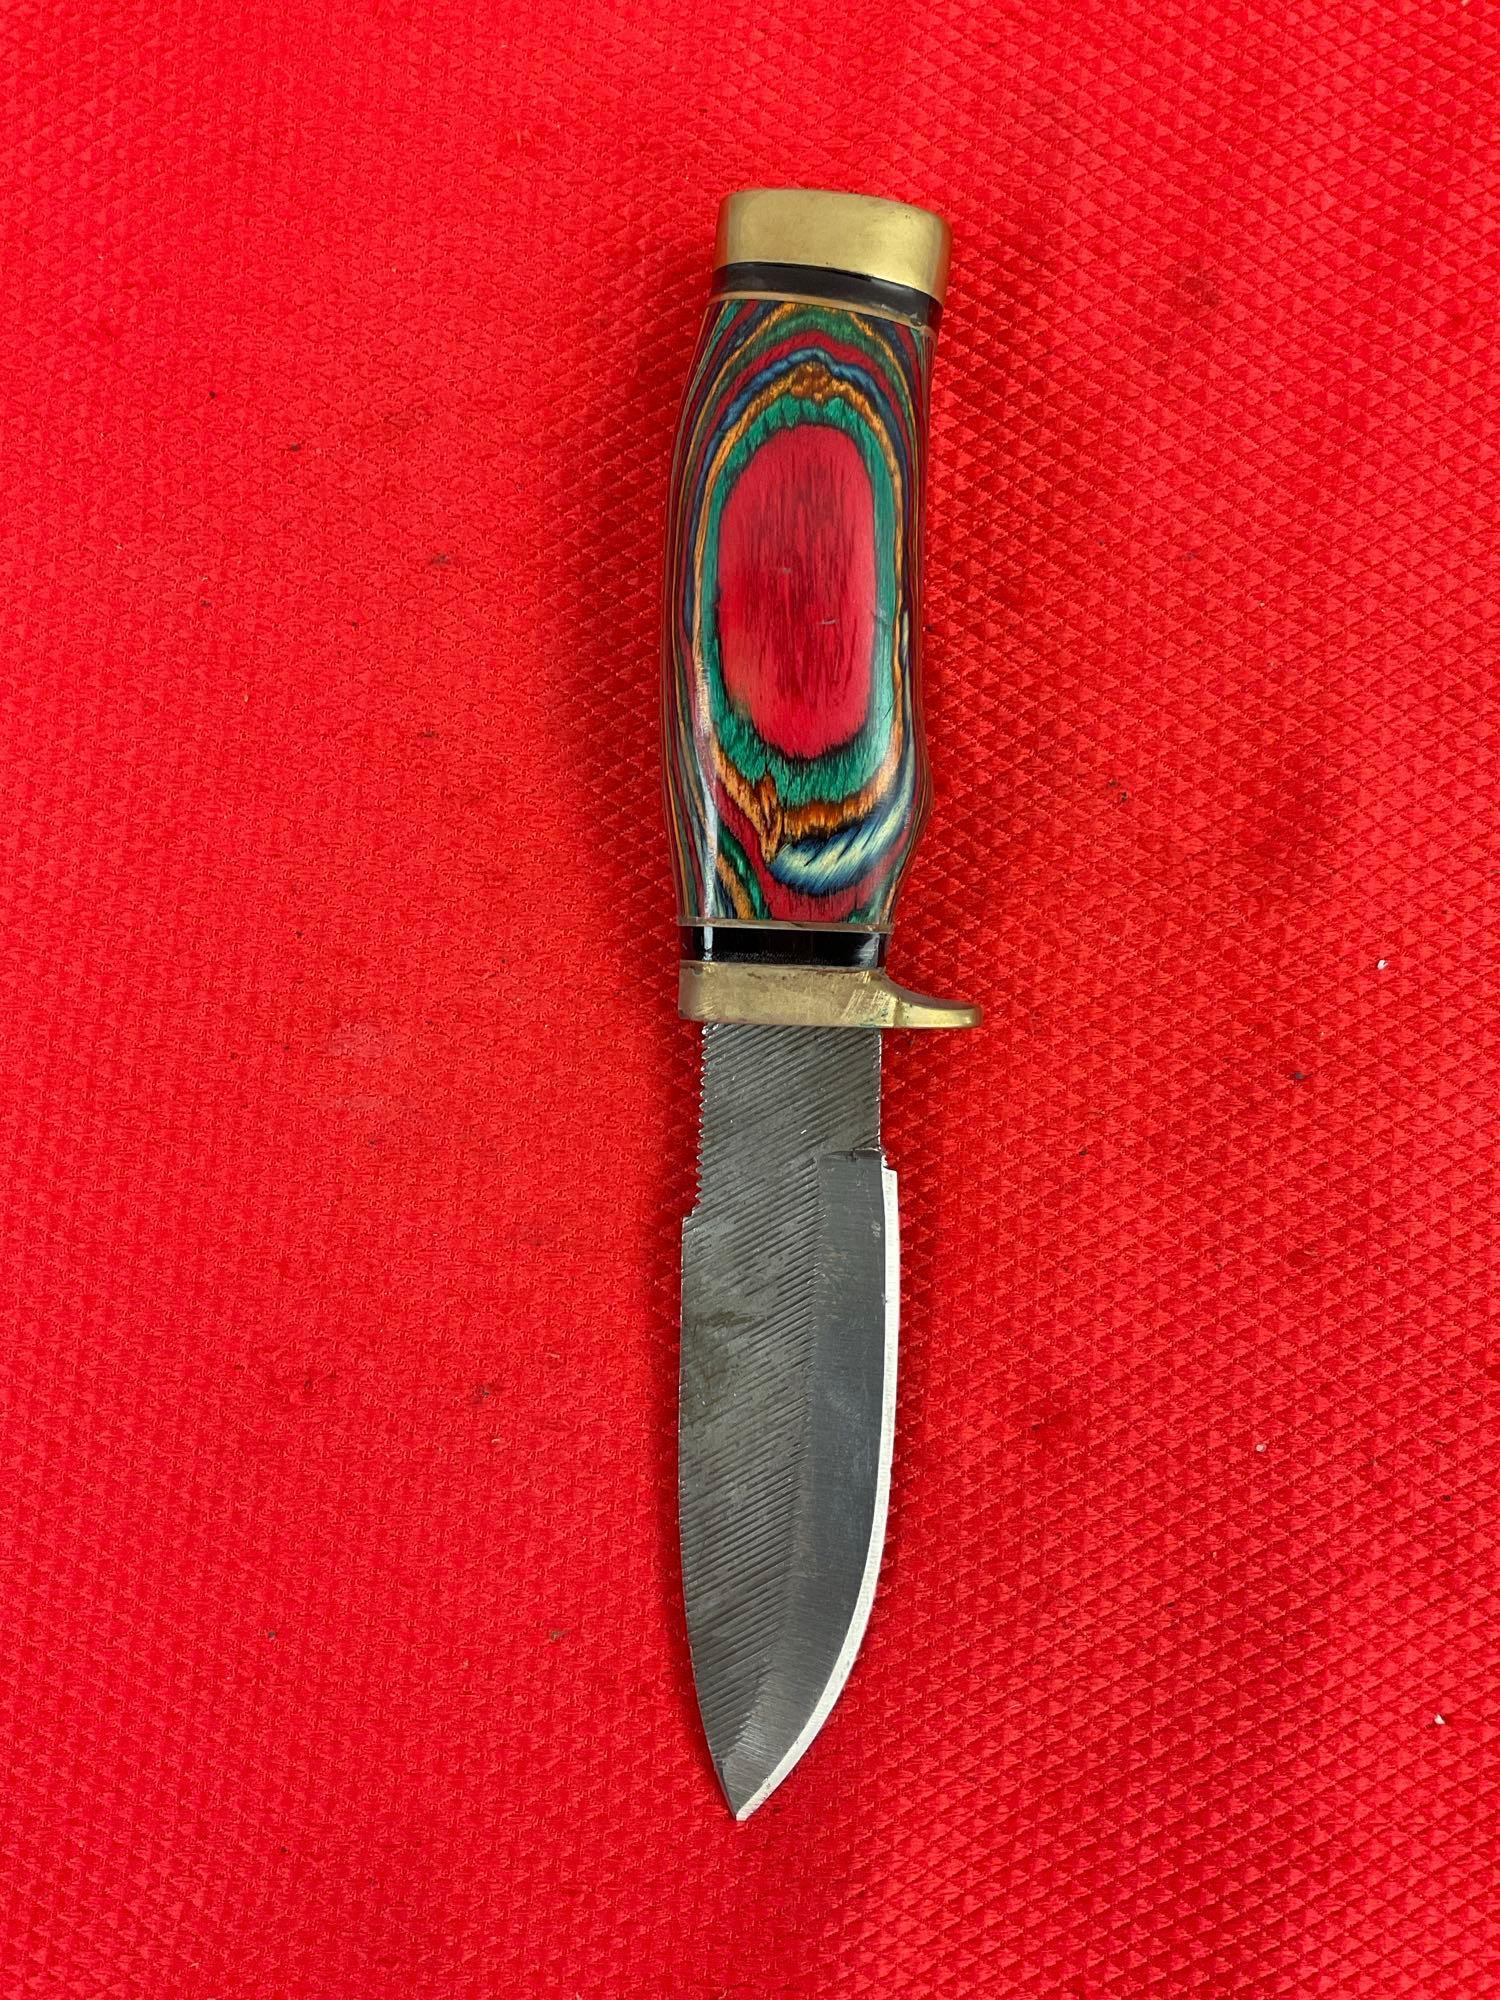 Pakistan Made 3.5" Steel Fixed Blade Skinning Knife w/ Colorful Wood Handle & Sheath. See pics.